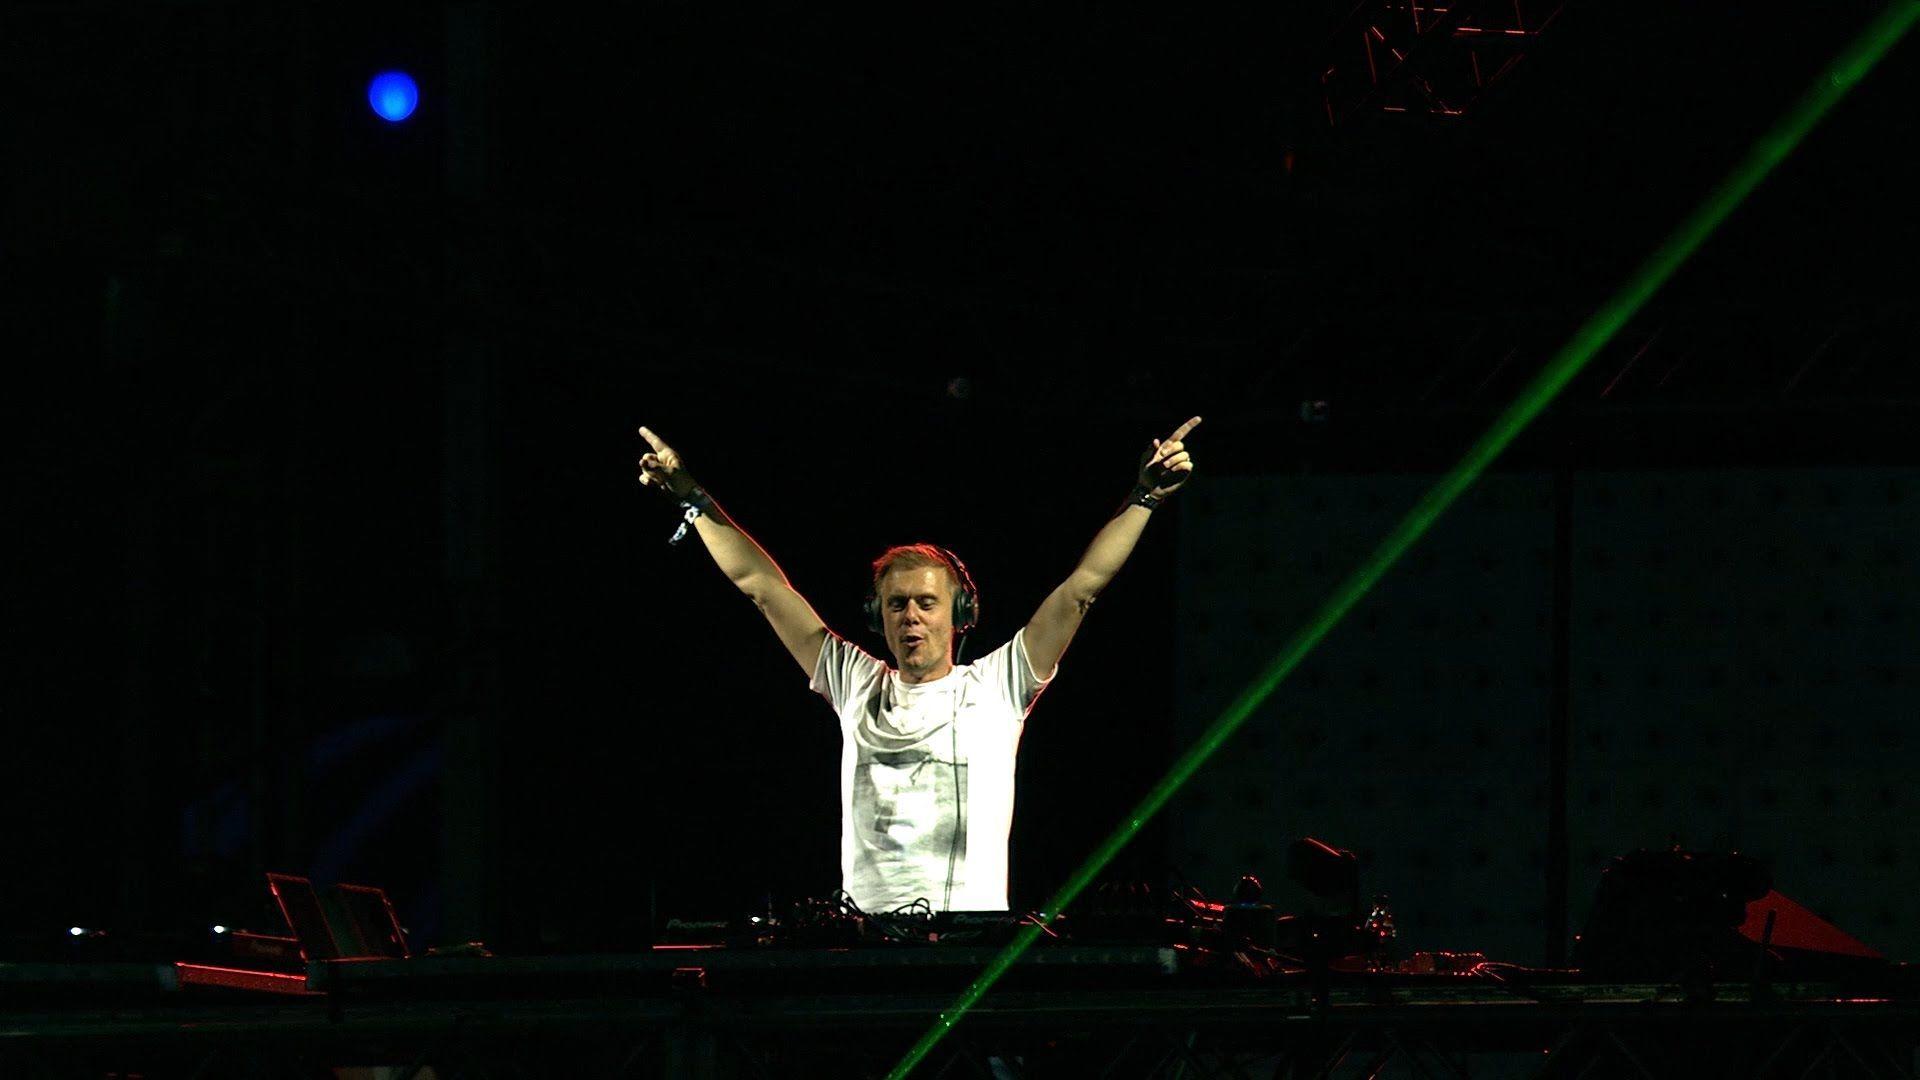 Armin van Buuren at EDC Las Vegas 2016